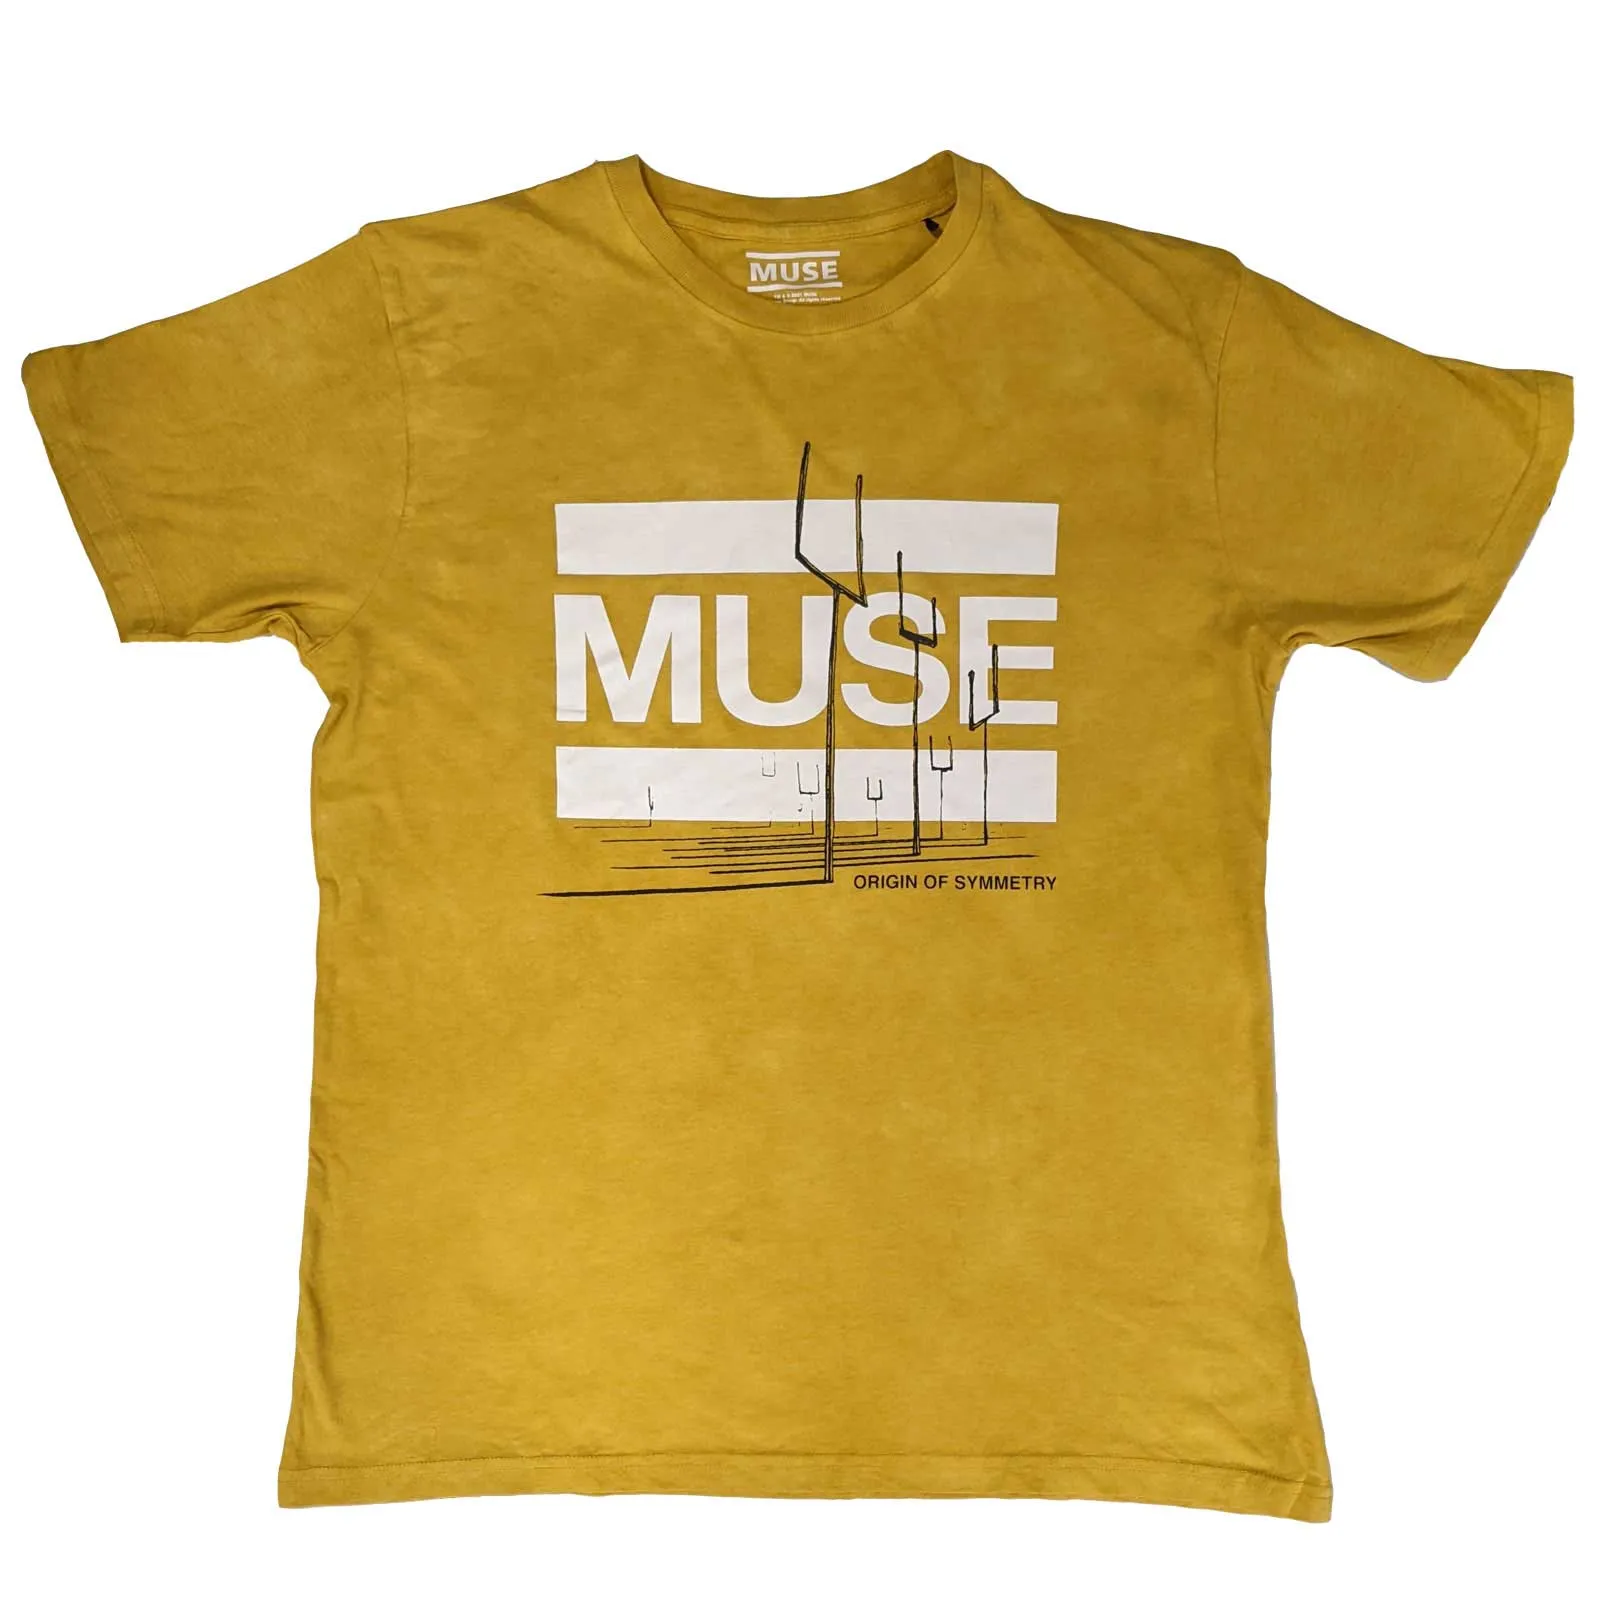 Muse - Unisex T-Shirt Origin of Symmetry Dip Dye, Mineral Wash, Dye Wash artwork